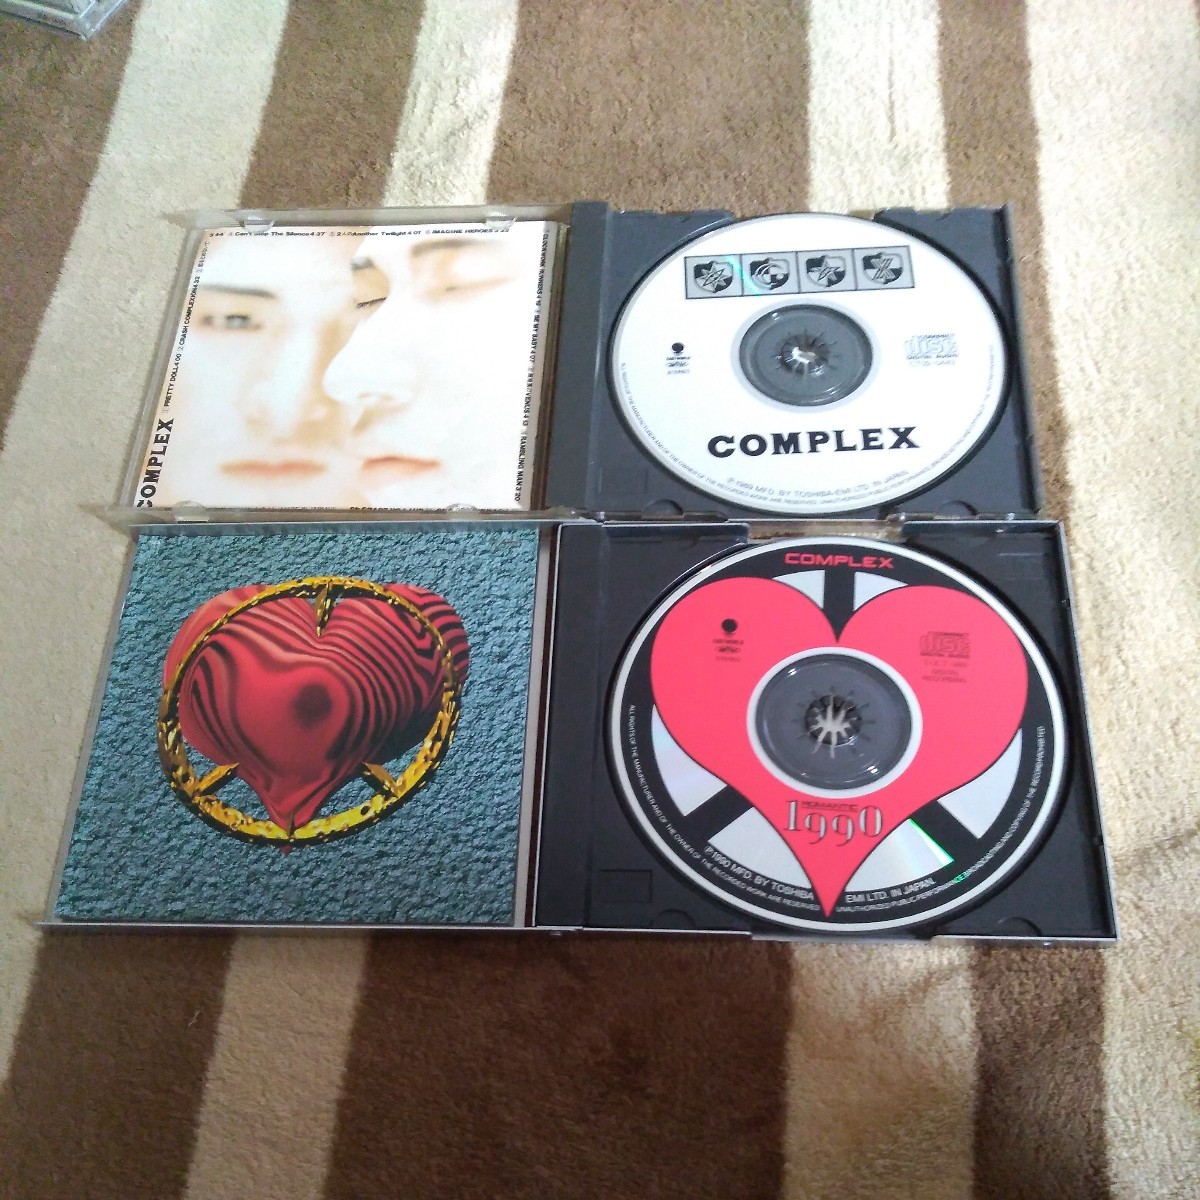 COMPLEX コンプレックス アルバム CD 2枚 セット COMPLEX ROMANTIC 1990 布袋寅泰 吉川晃司 恋をとめないで BE MY BABY_画像3